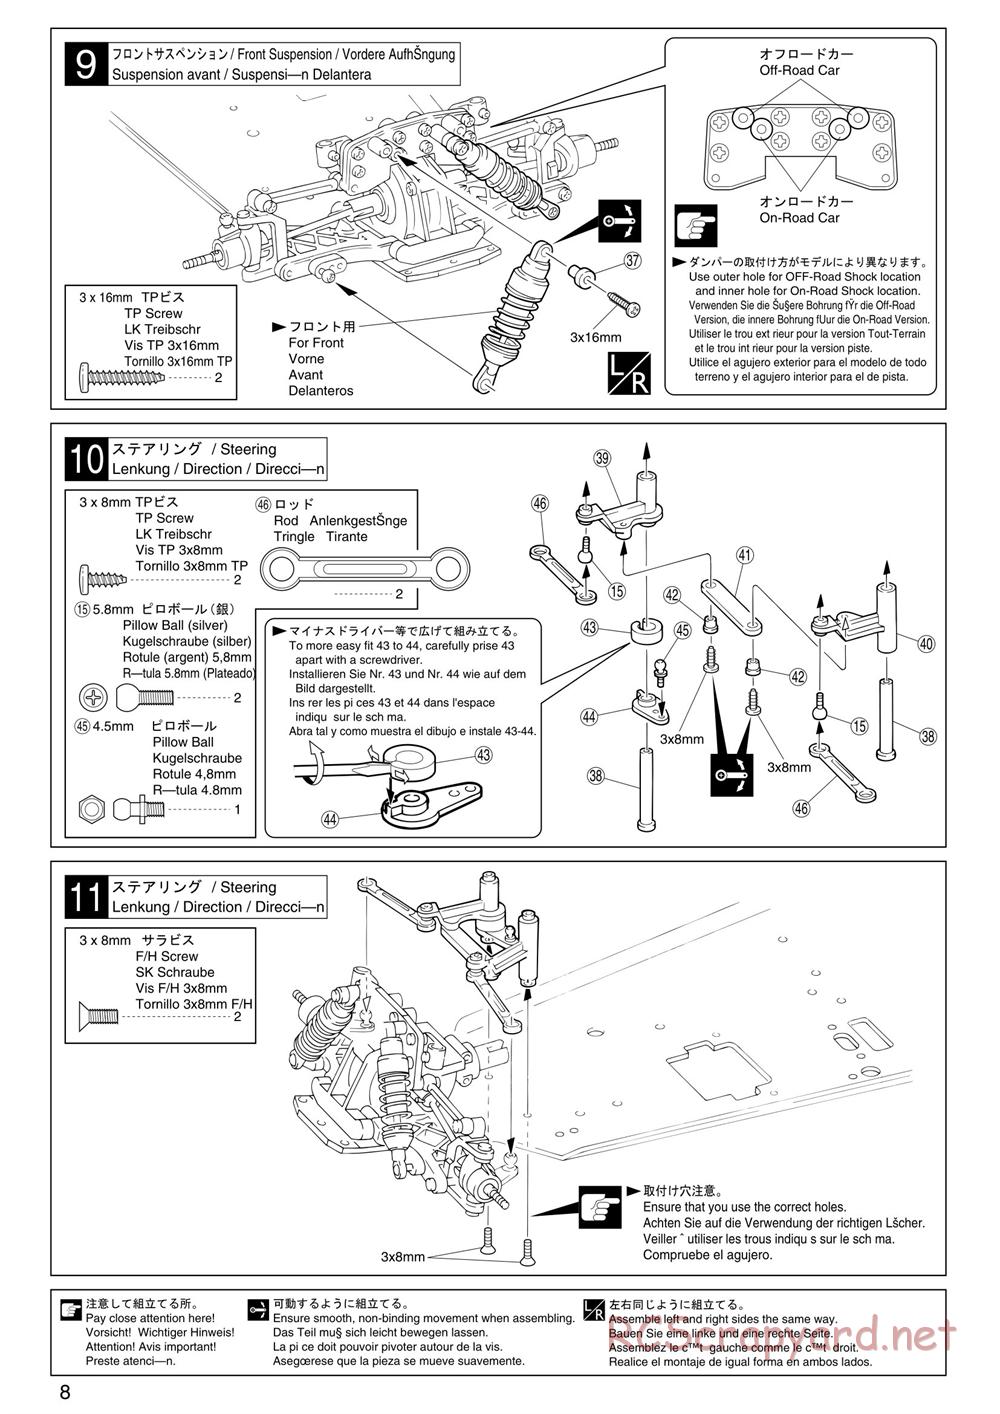 Kyosho - PureTen GP Alpha 2 - Manual - Page 8